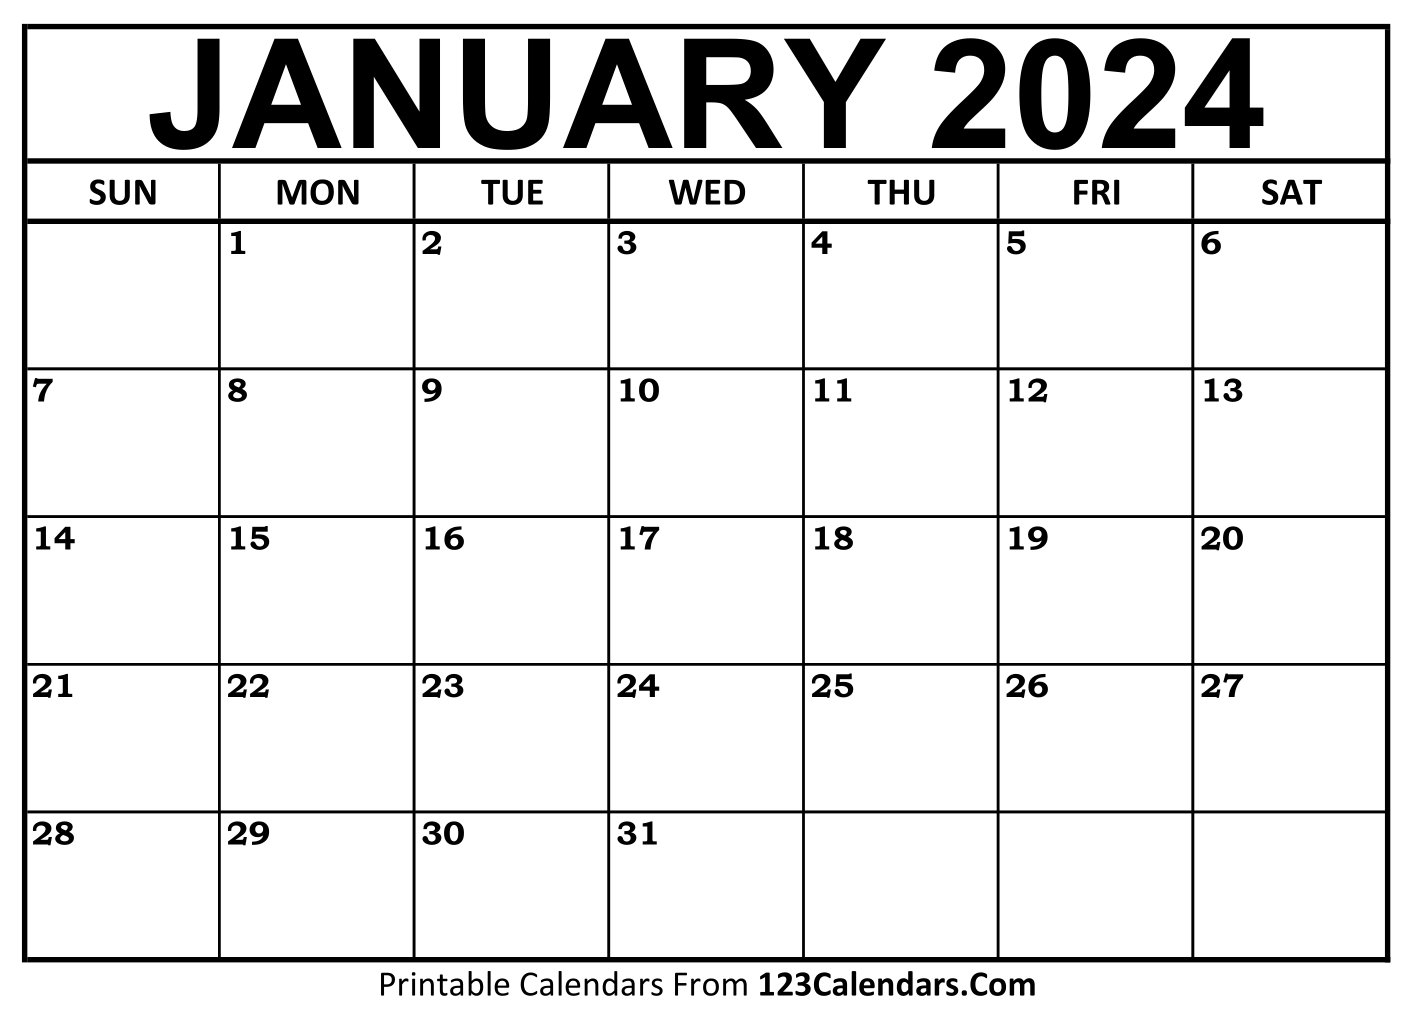 Printable January 2024 Calendar Templates - 123Calendars for Free Printable Calendar For January 2024